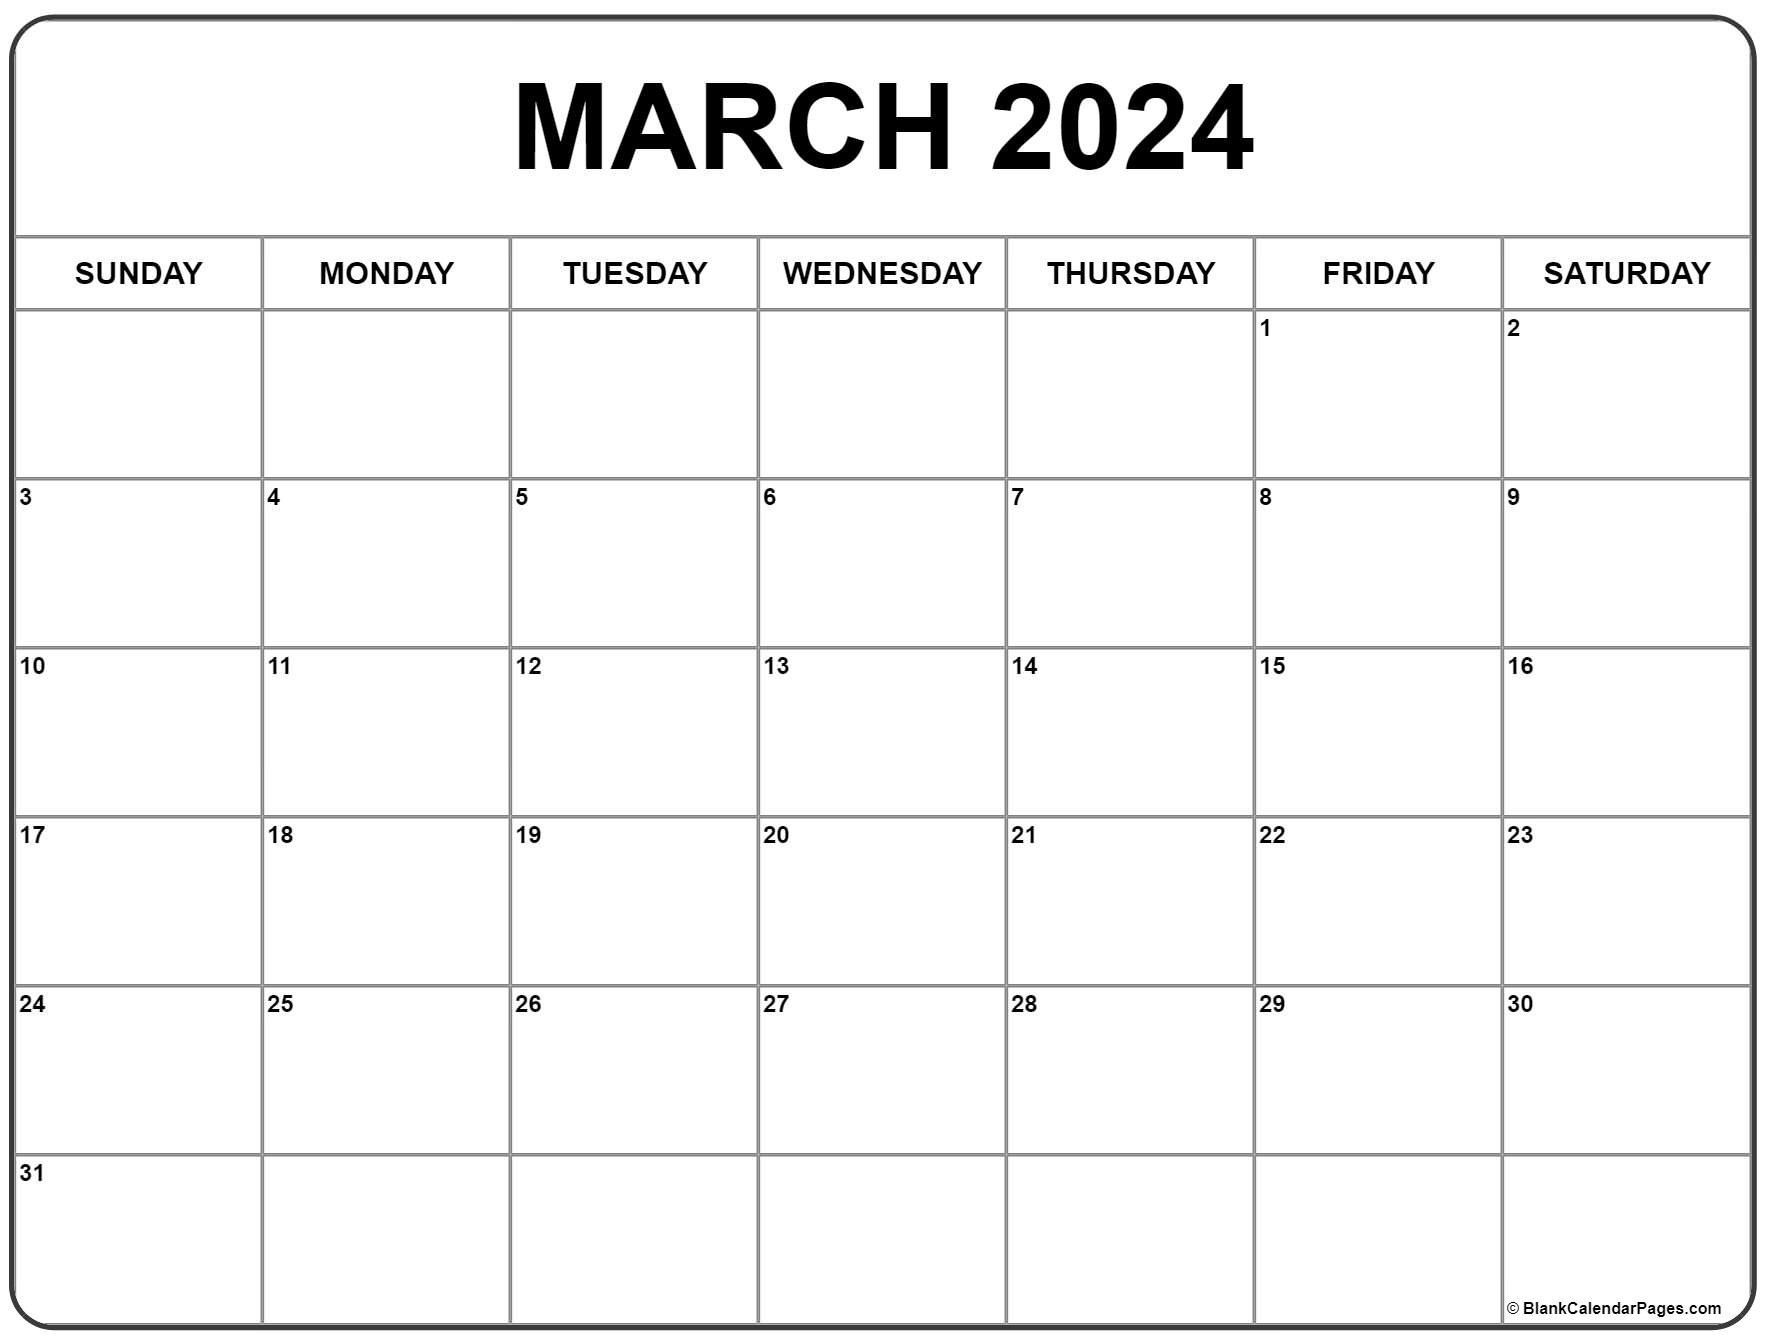 March 2024 Calendar | Free Printable Calendar for A Printable Calendar March 2024